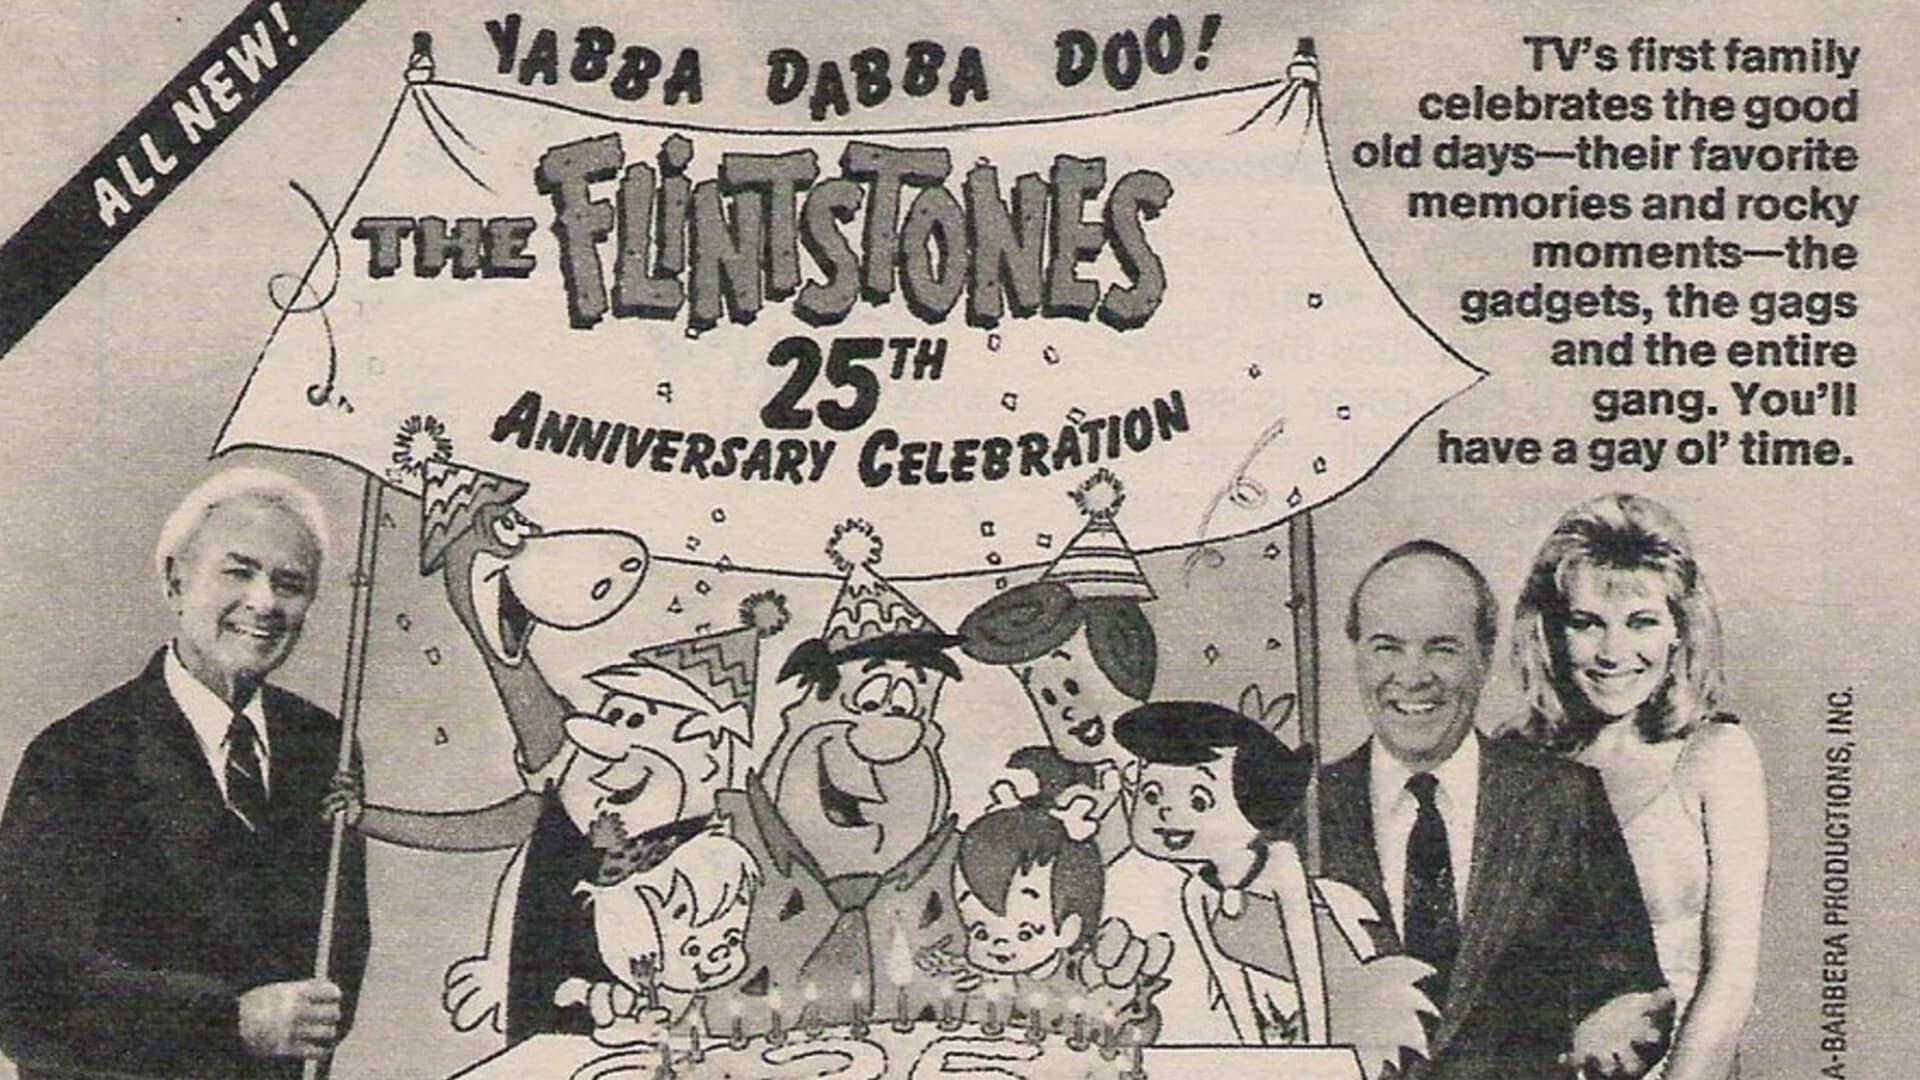 The Flintstones' 25th Anniversary Celebration backdrop